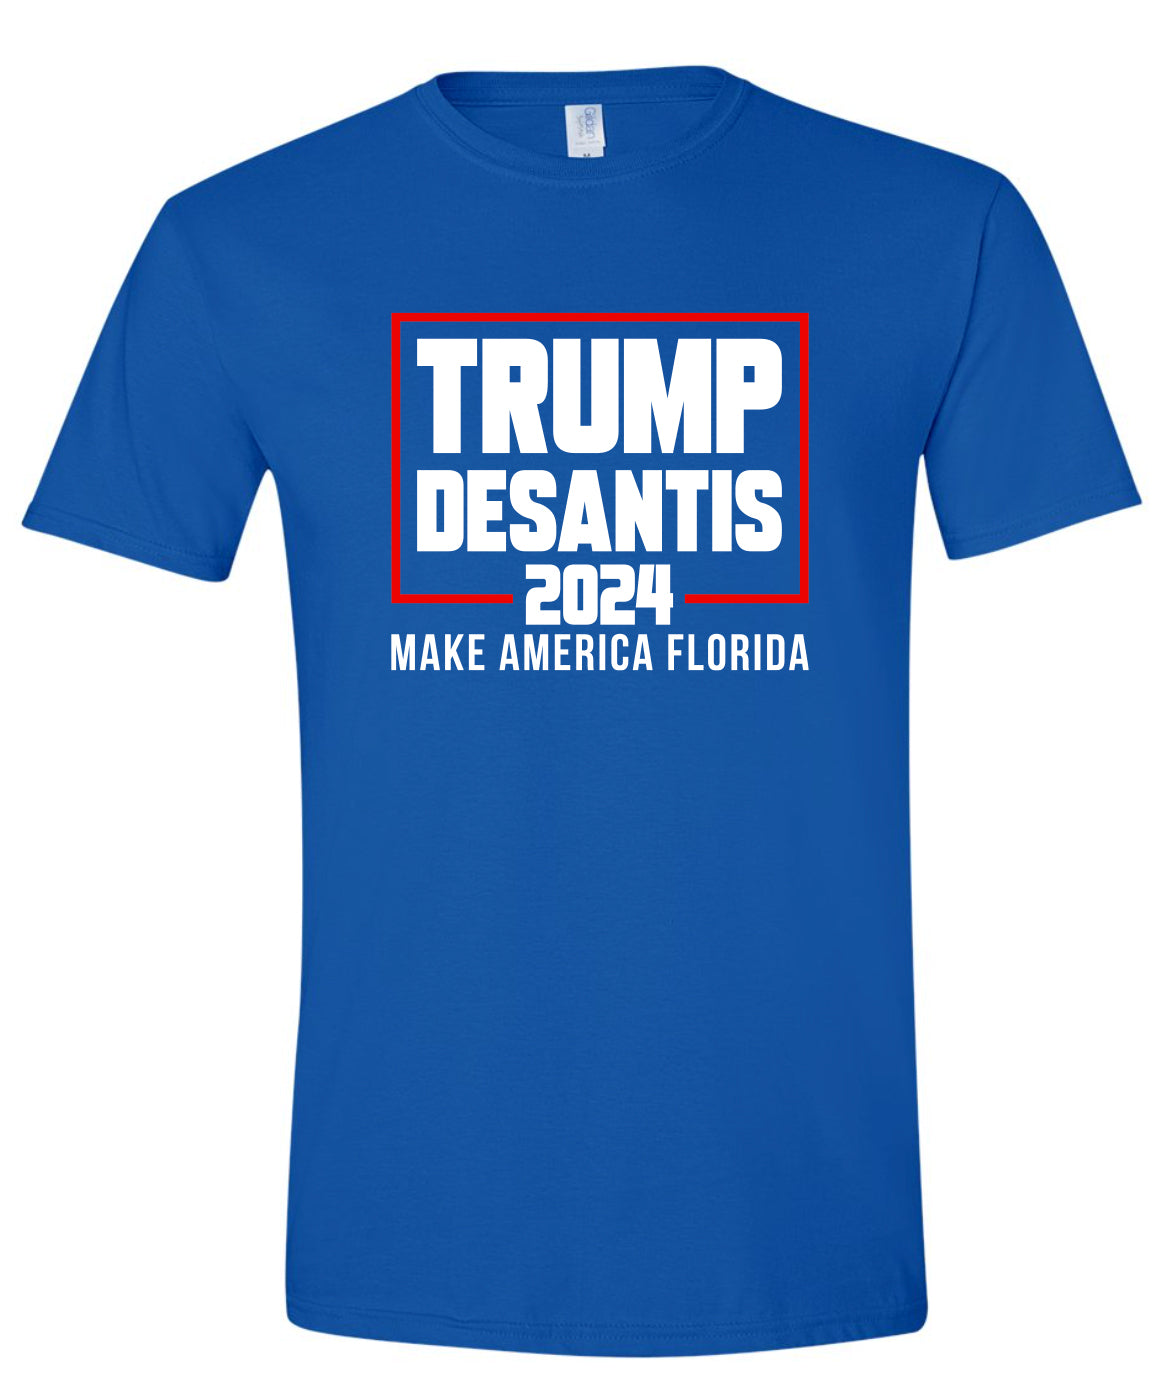 Trump Desantis 2024 "Make America Florida"